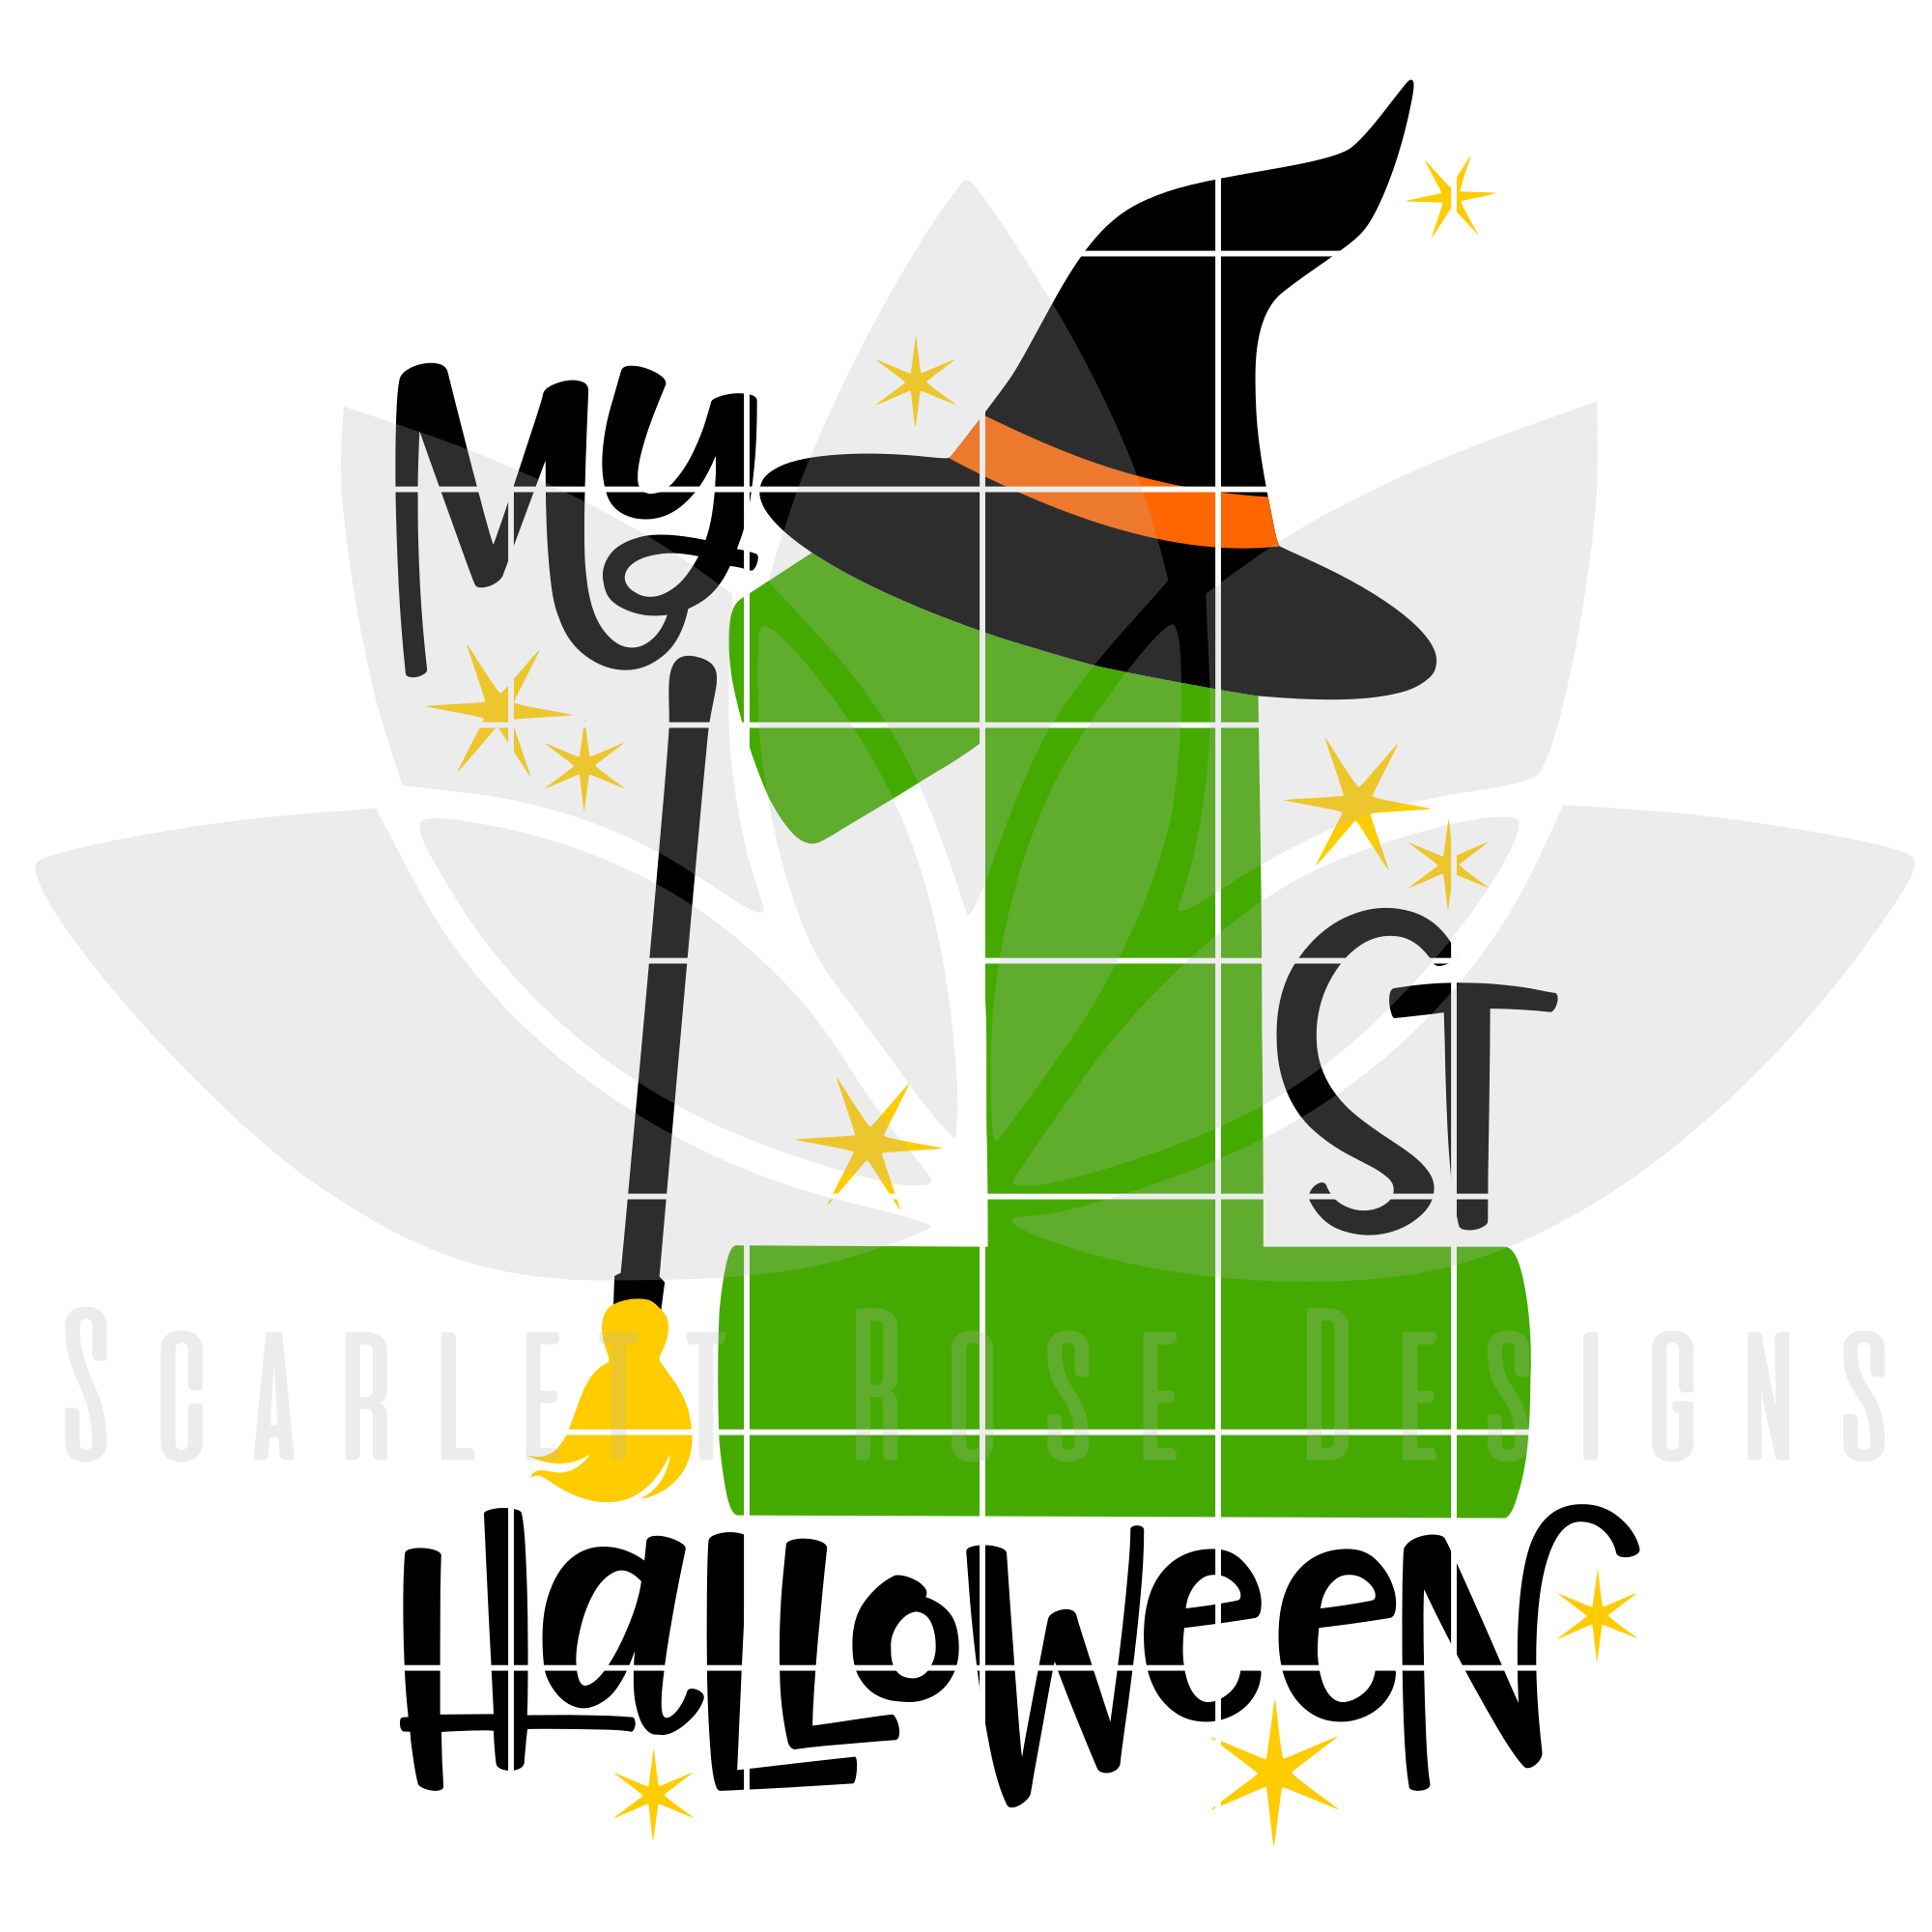 Download My First Halloween SVG, DXF cut file - Scarlett Rose Designs